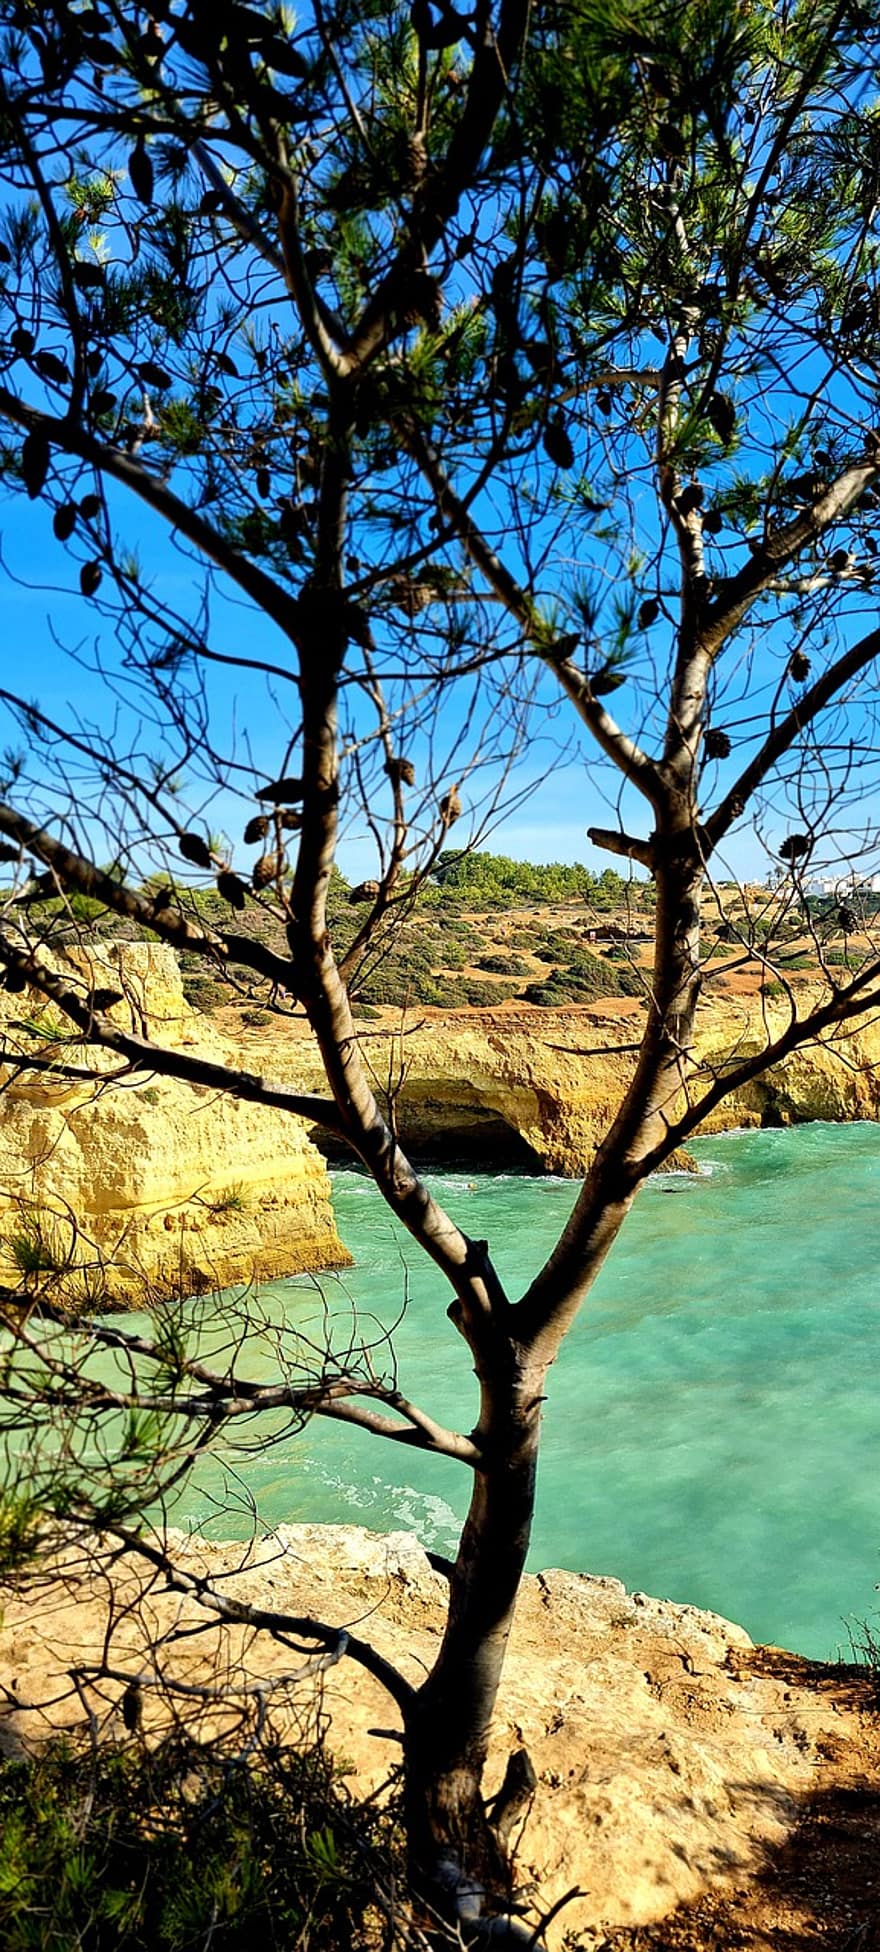 Algarve, Ocean, Hike, To Travel, Coastal Sea, Rock, Landscape, Nature, Cave, Water, Vacations